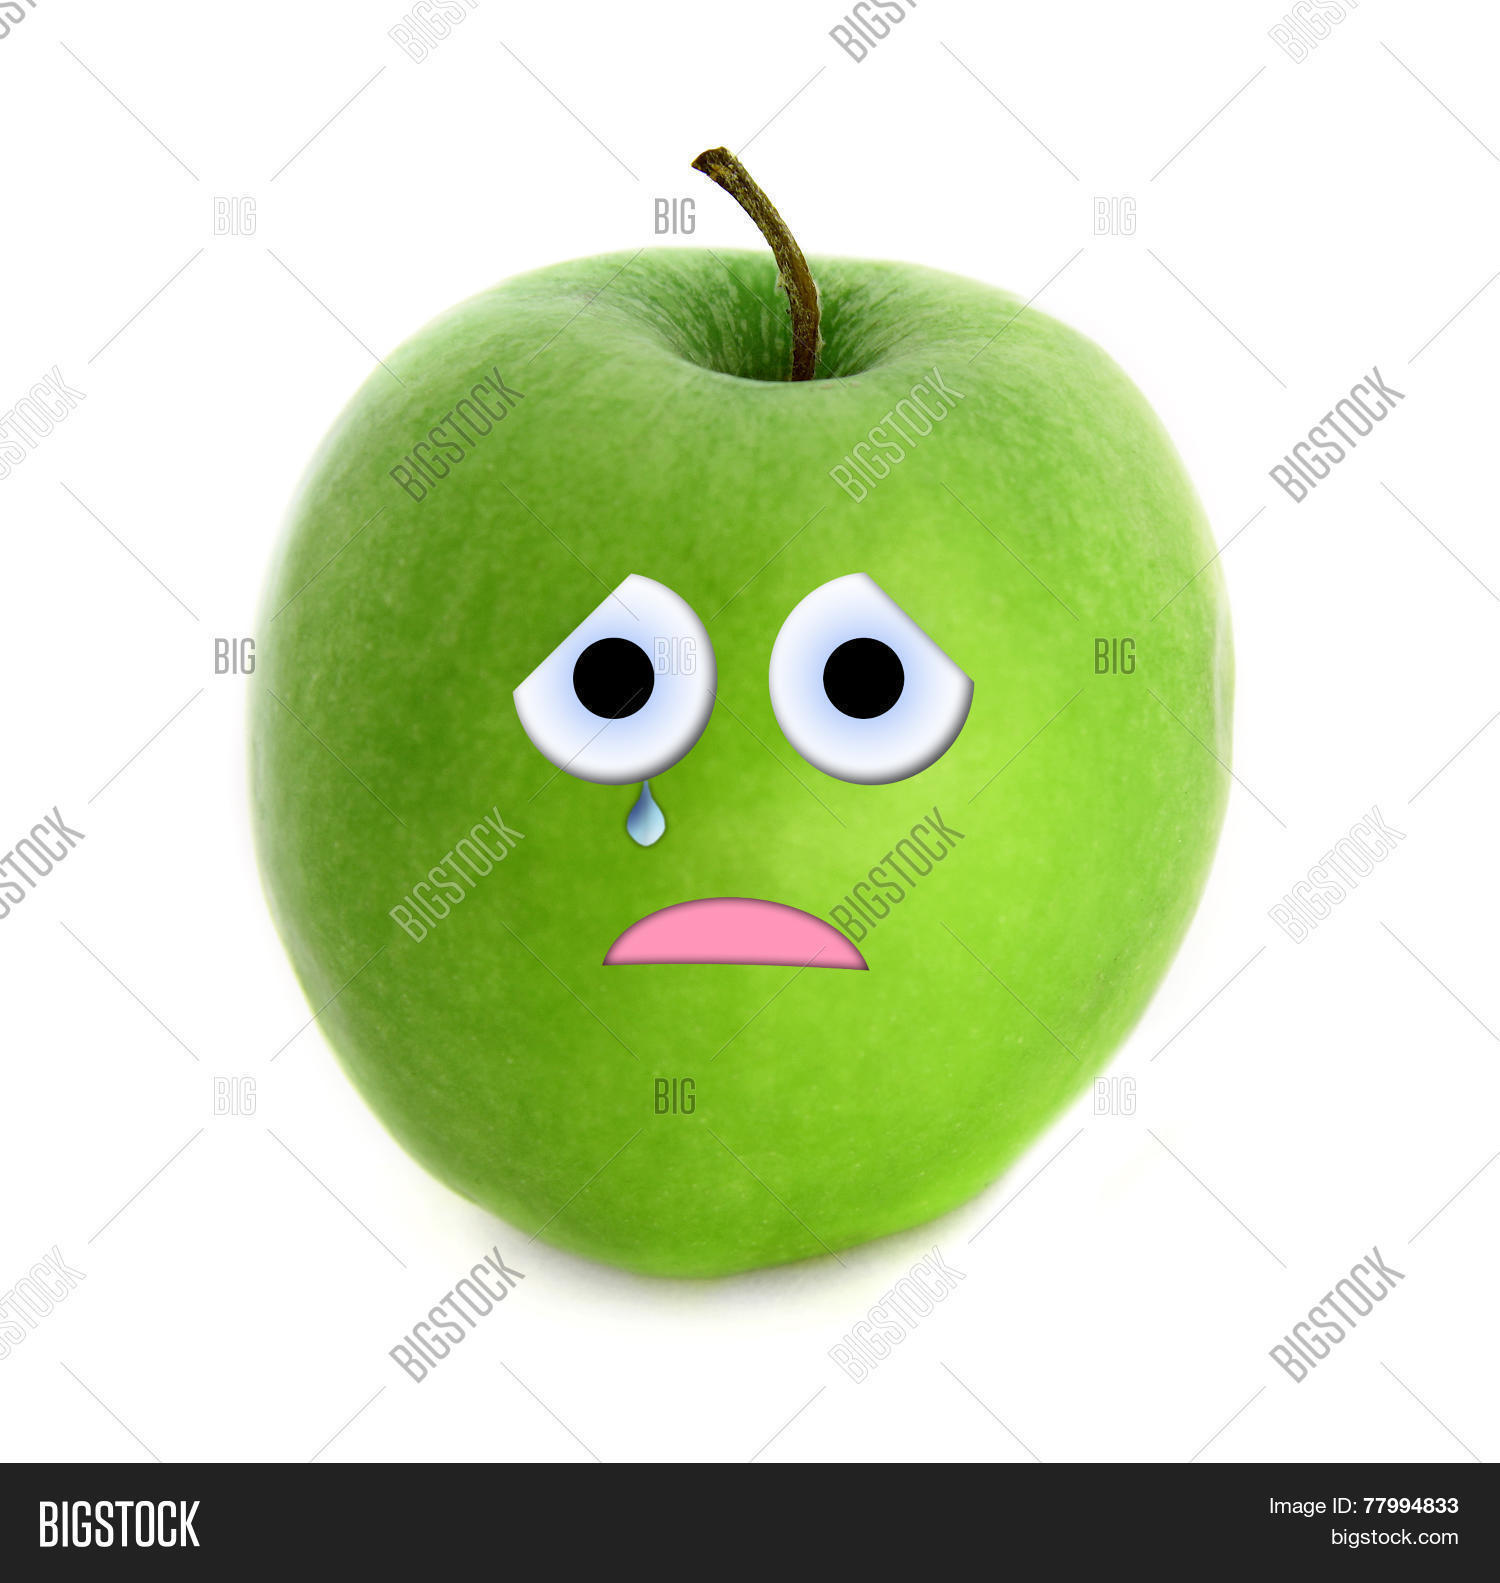 Crying Apple Image & Photo | Bigstock